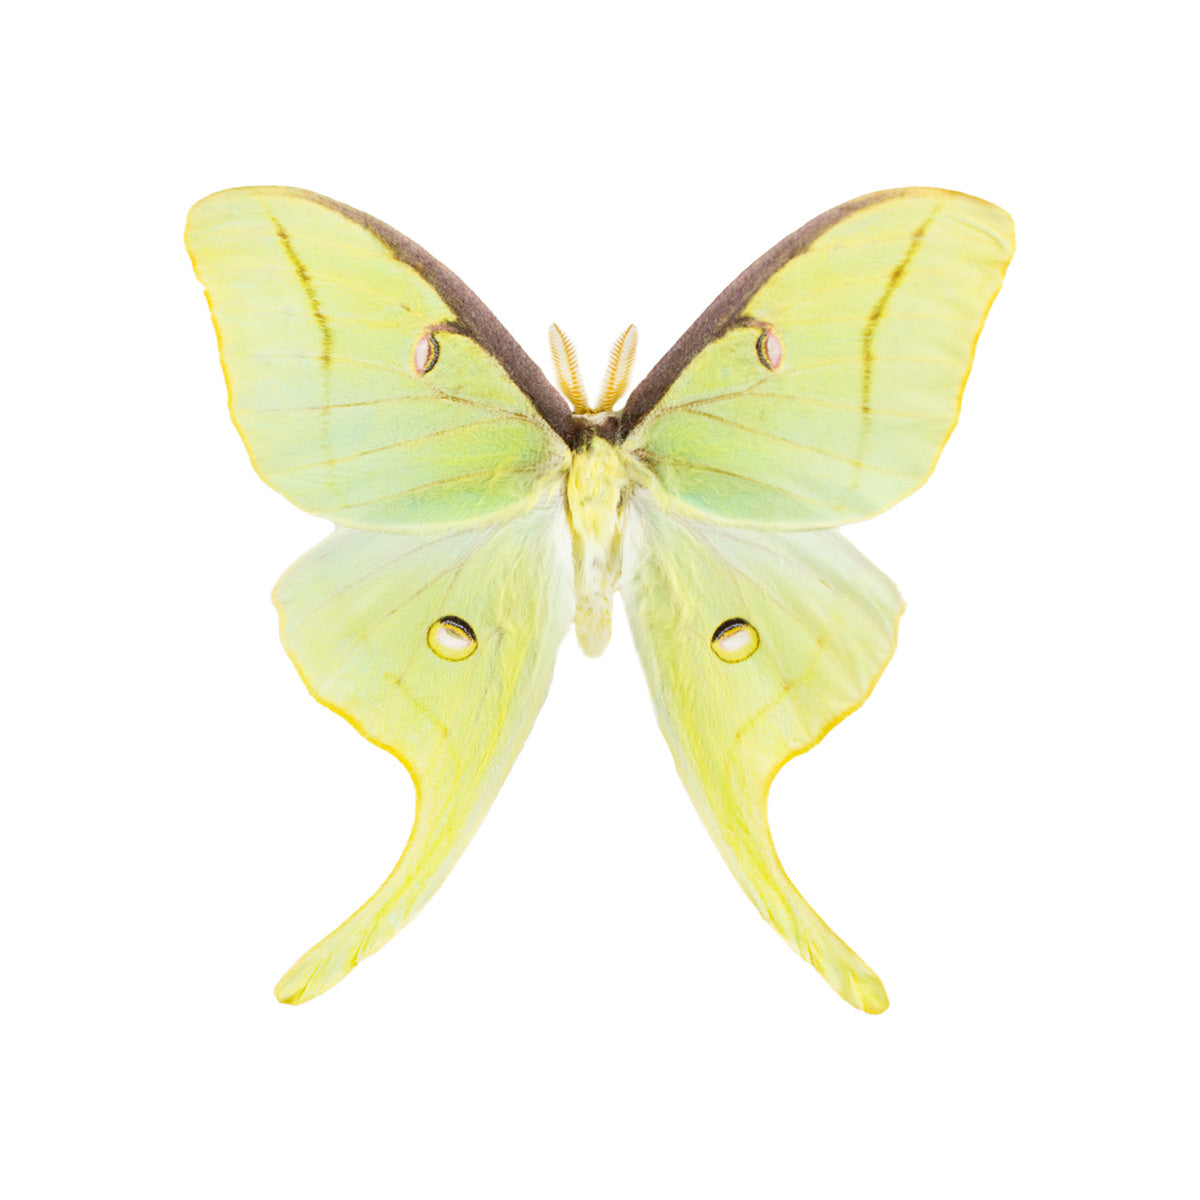 A Perfect Deaths Head Hawk Moth Real Specimen A1